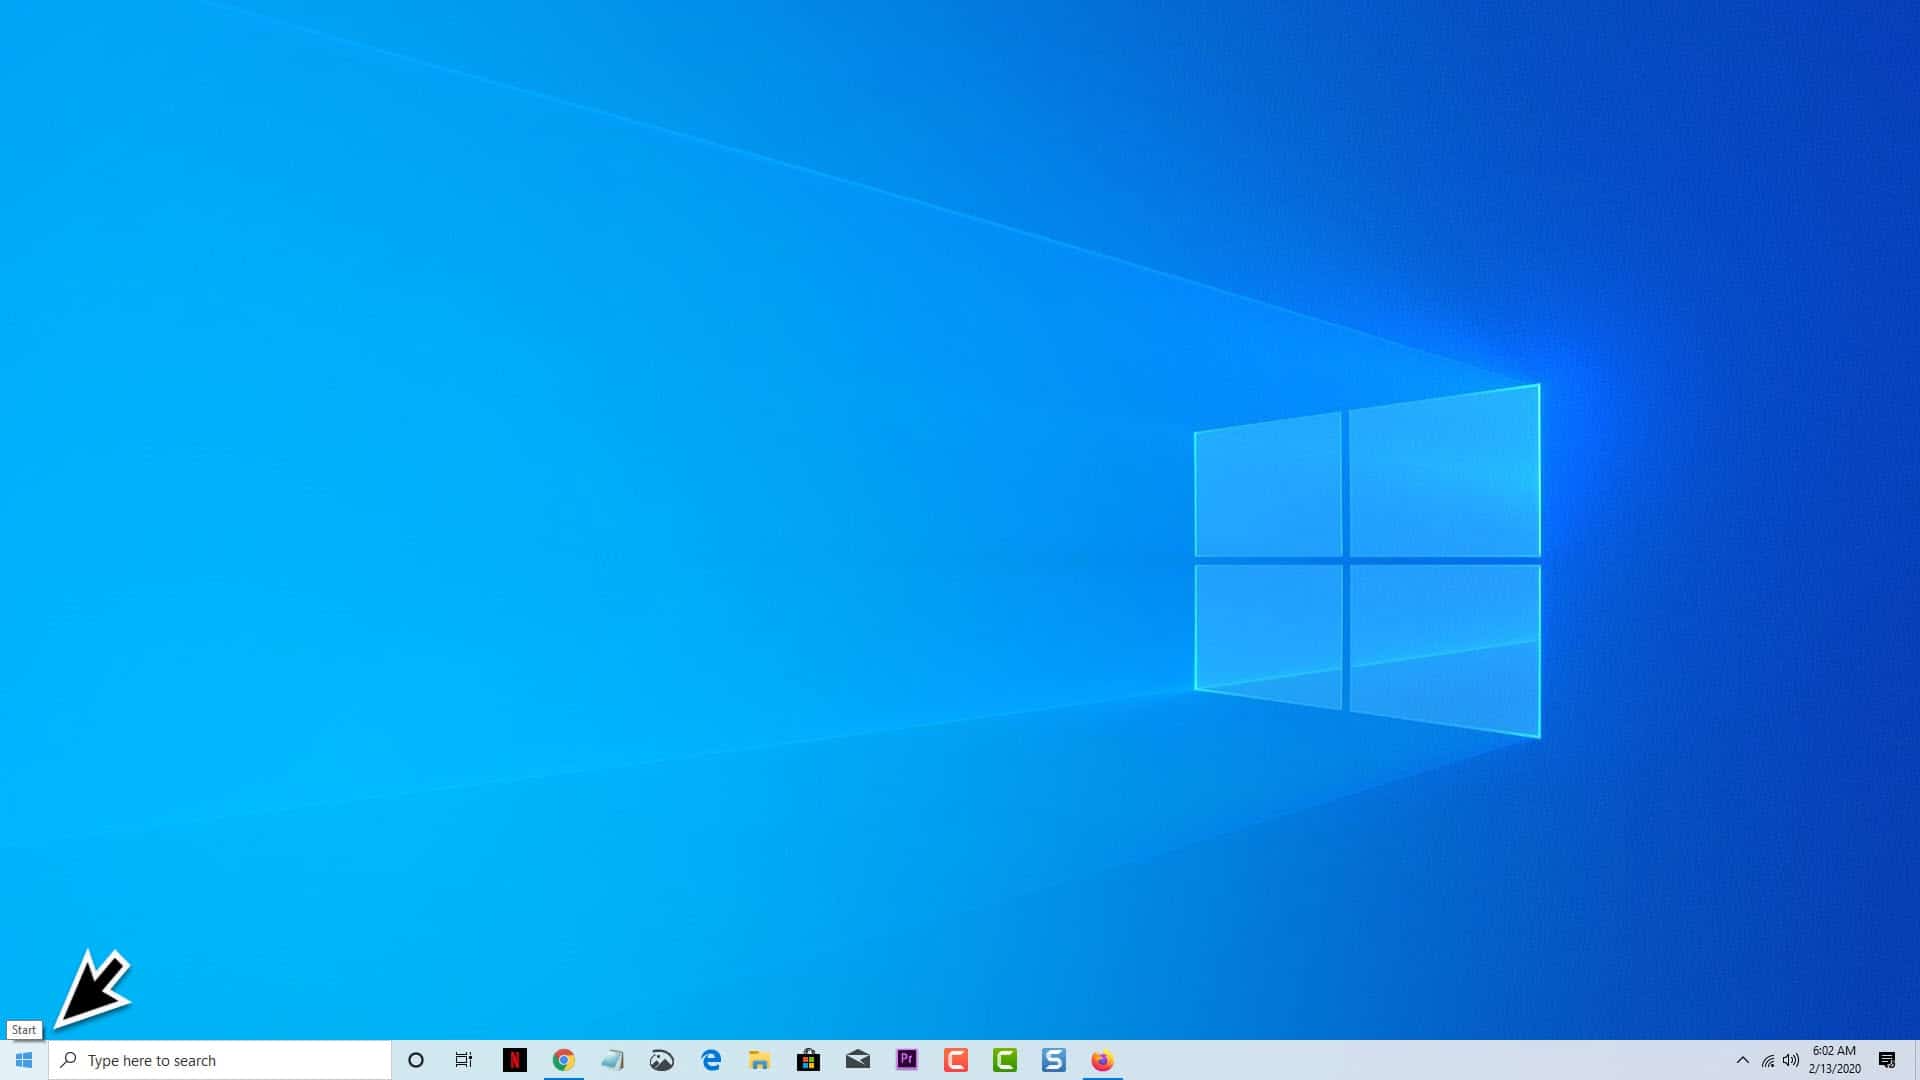 Login to Windows 10 automatically